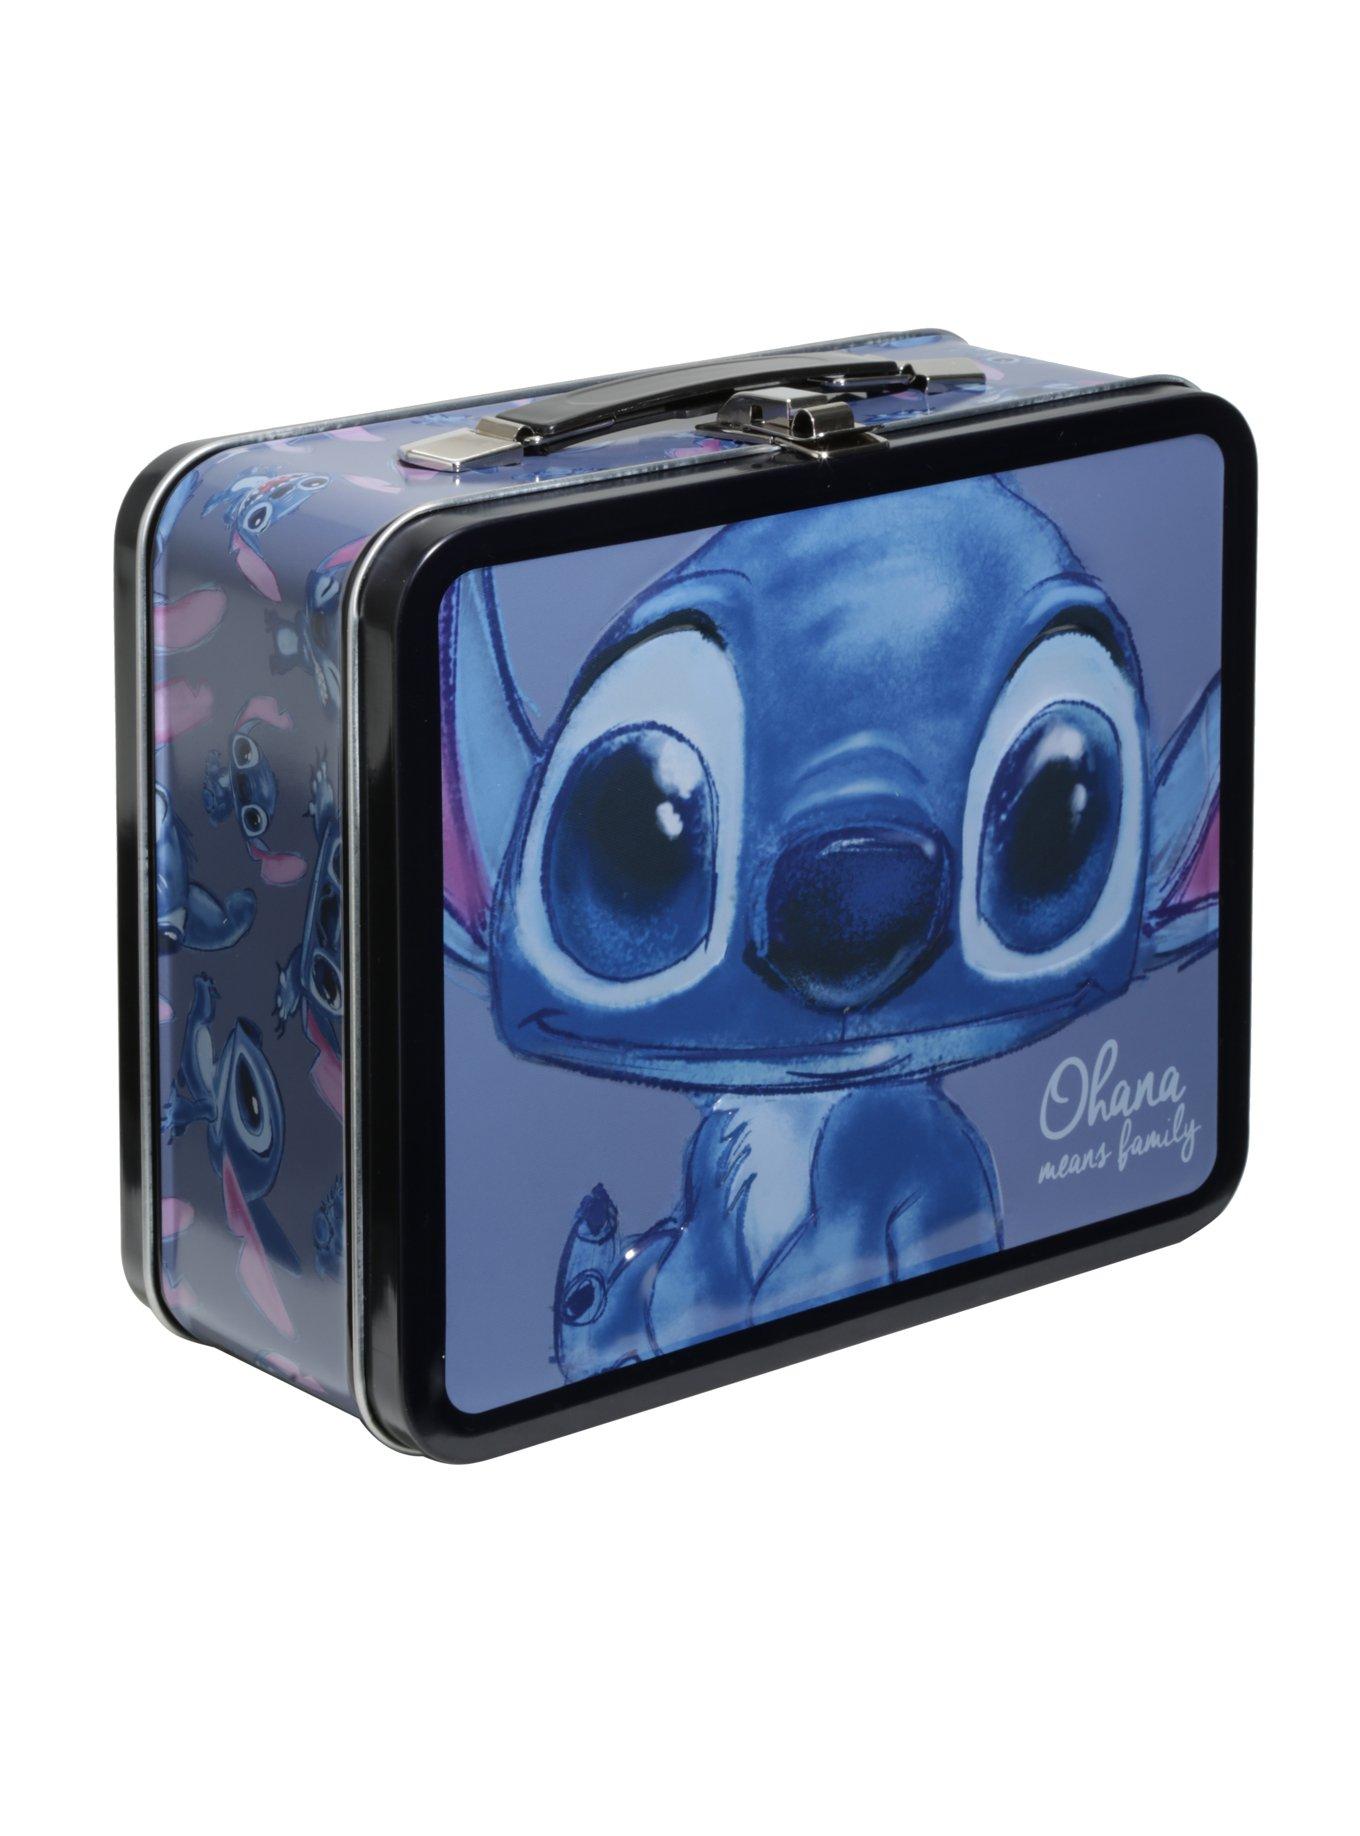 Disney Stitch Lunch Box, Hobby Lobby